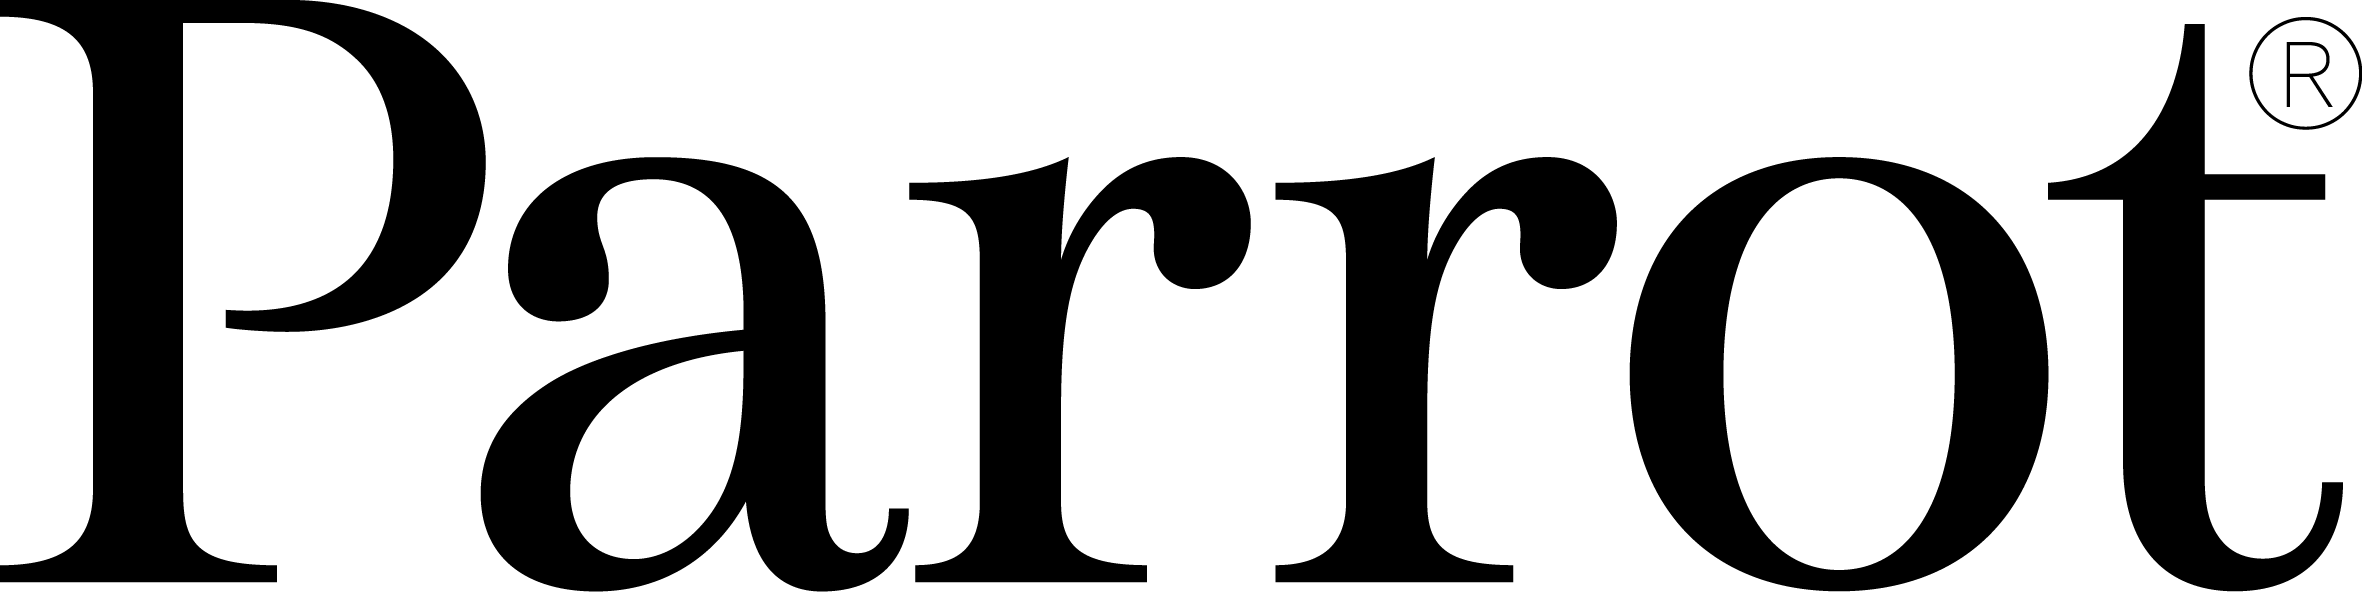 Parrot - logo